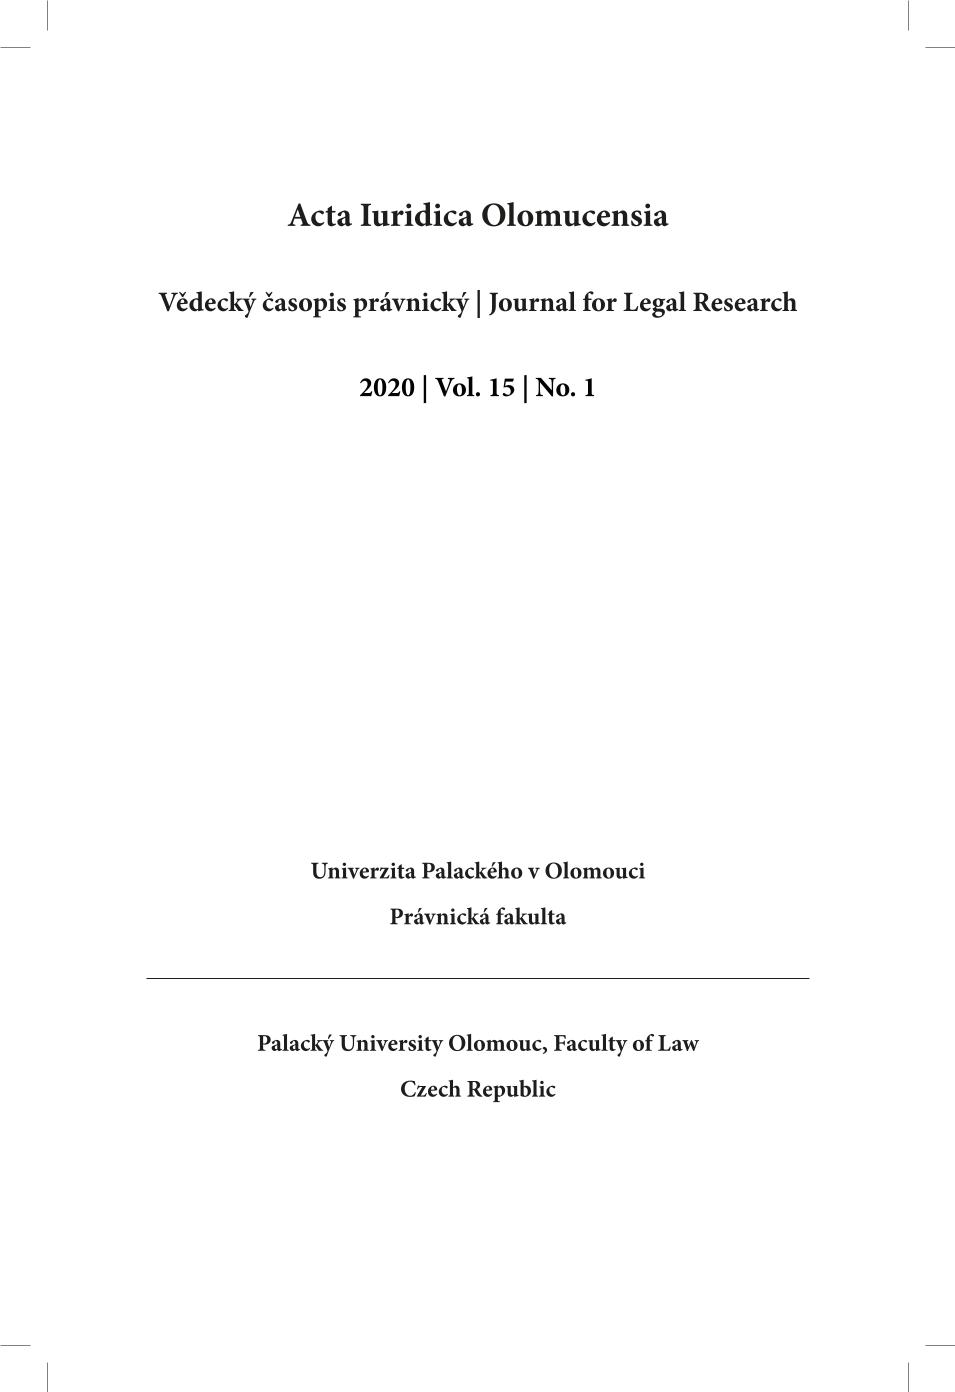 Legal culture and chosen facilitative methods of civil dispute resolution 
in the Czech Republic Cover Image